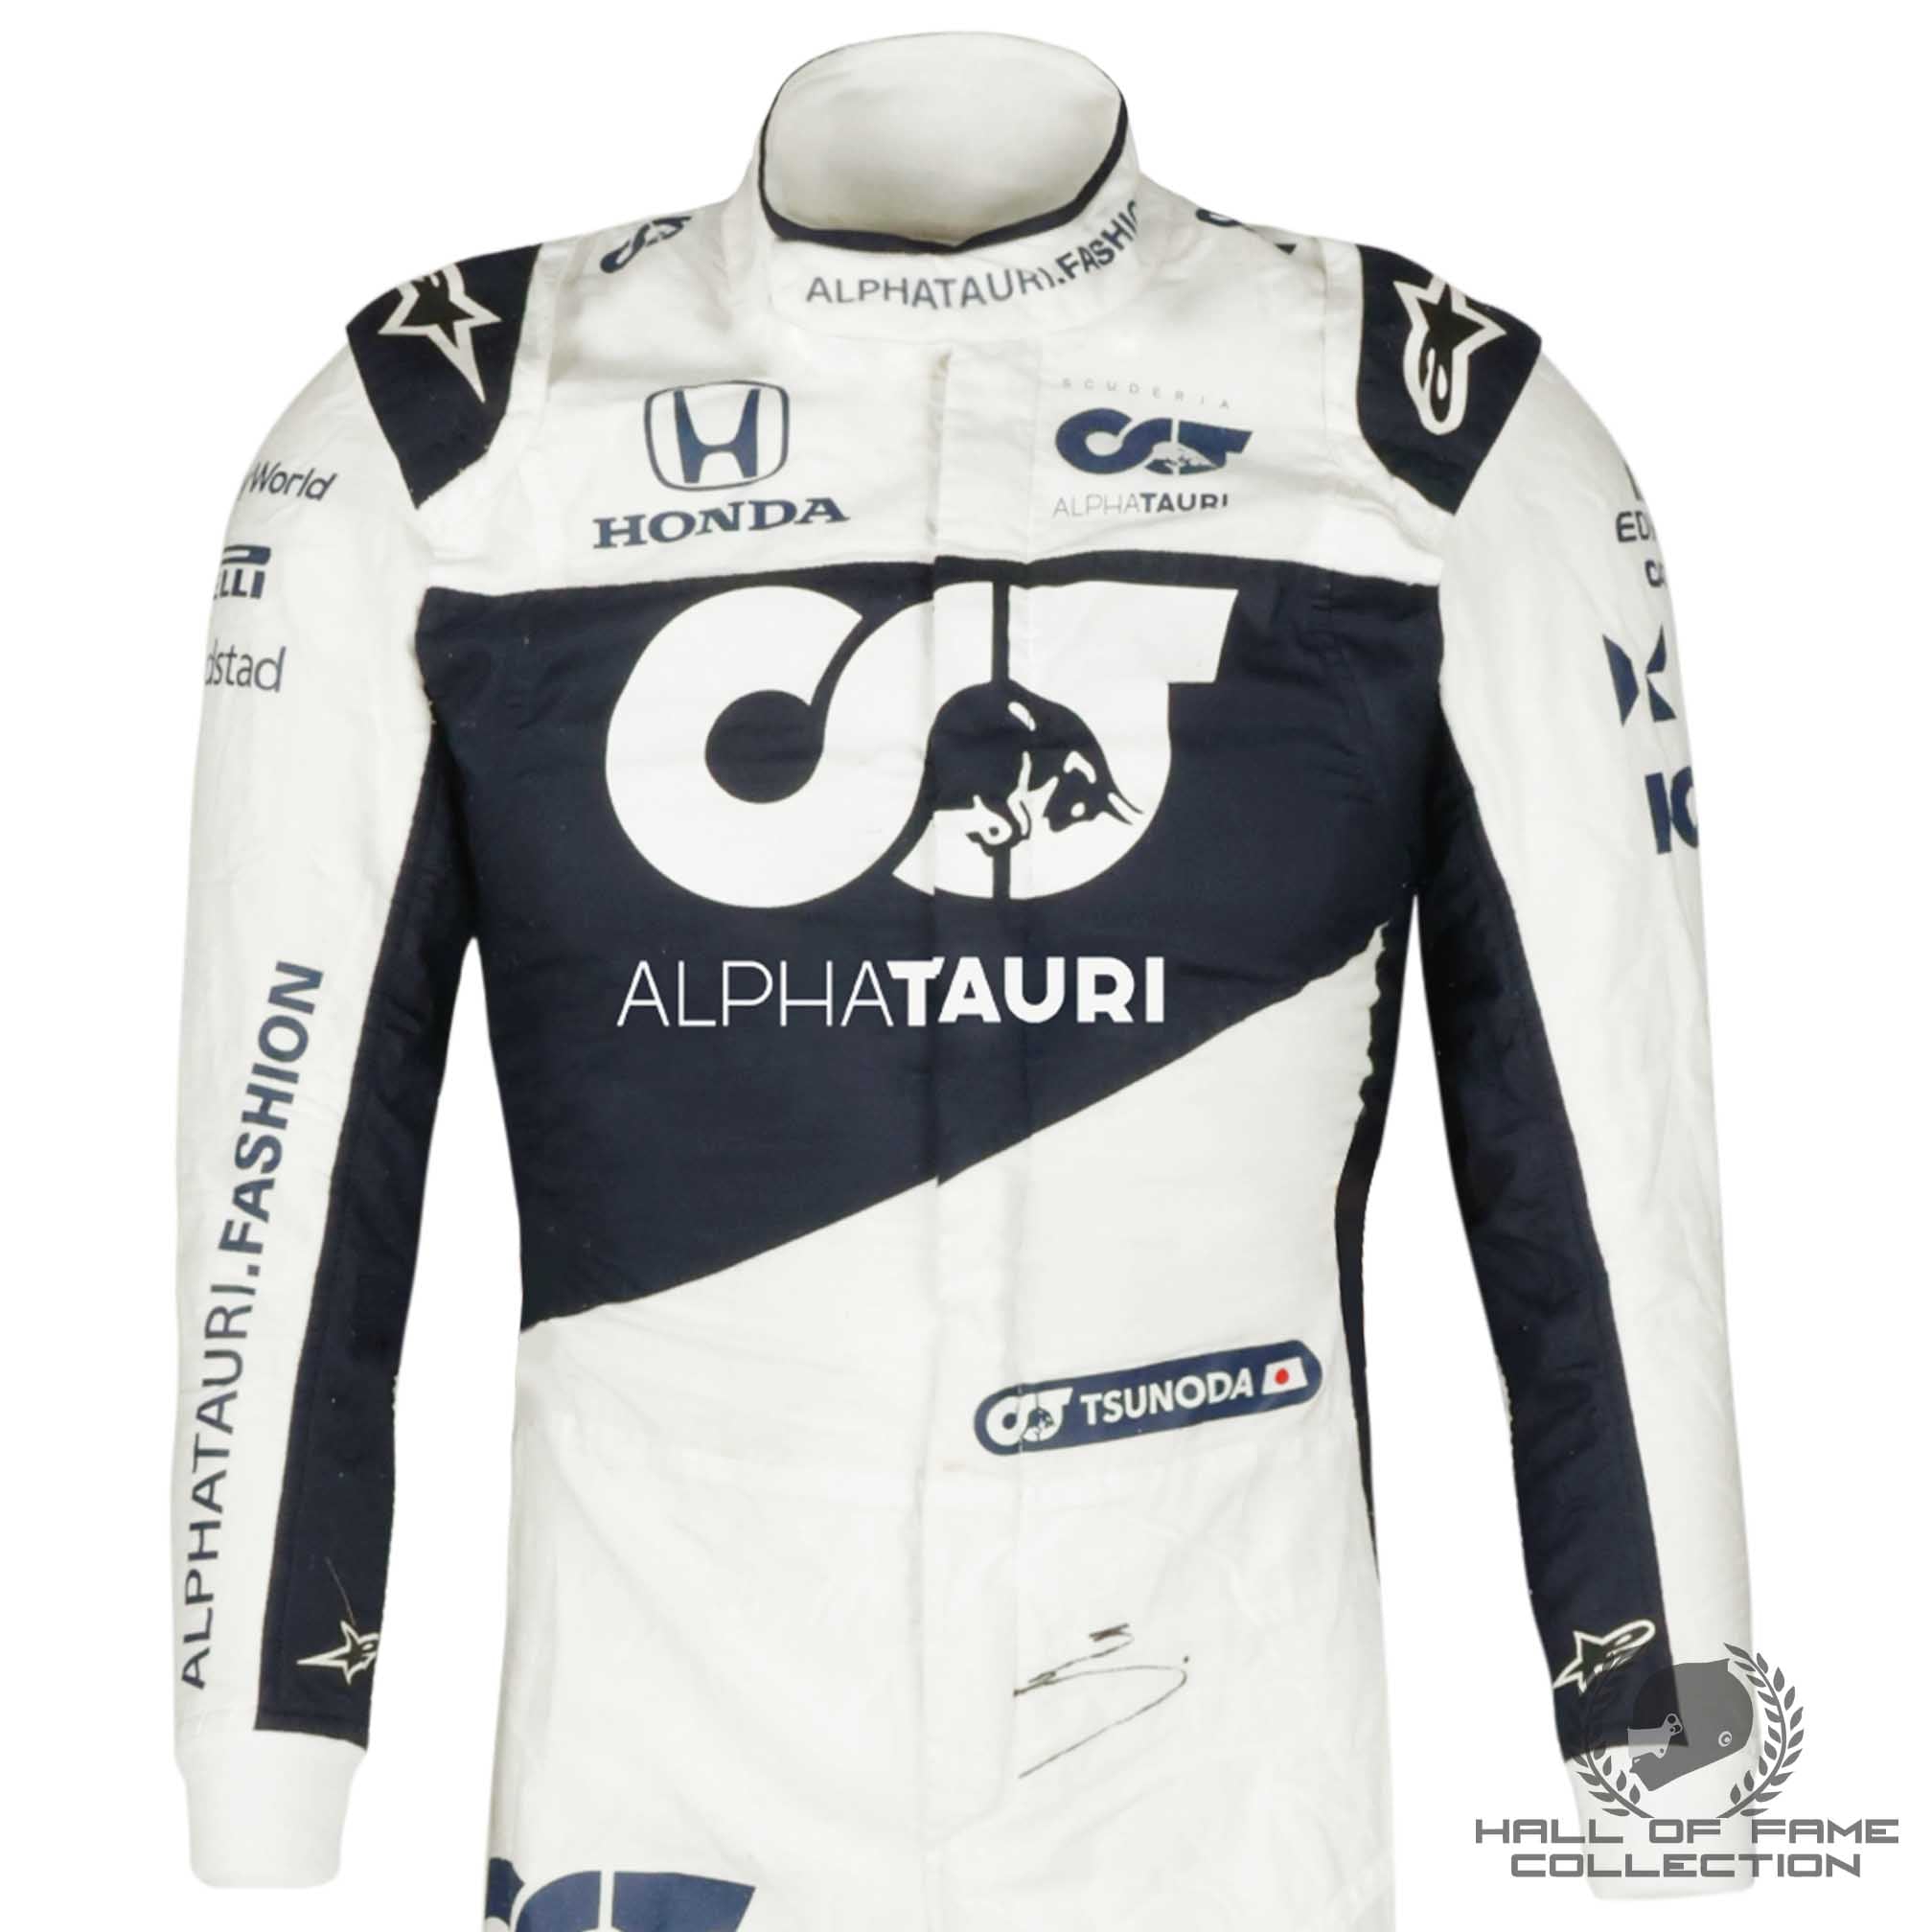 2021 Yuki Tsunoda Signed Race Used Rookie Season AlphaTauri F1 Suit